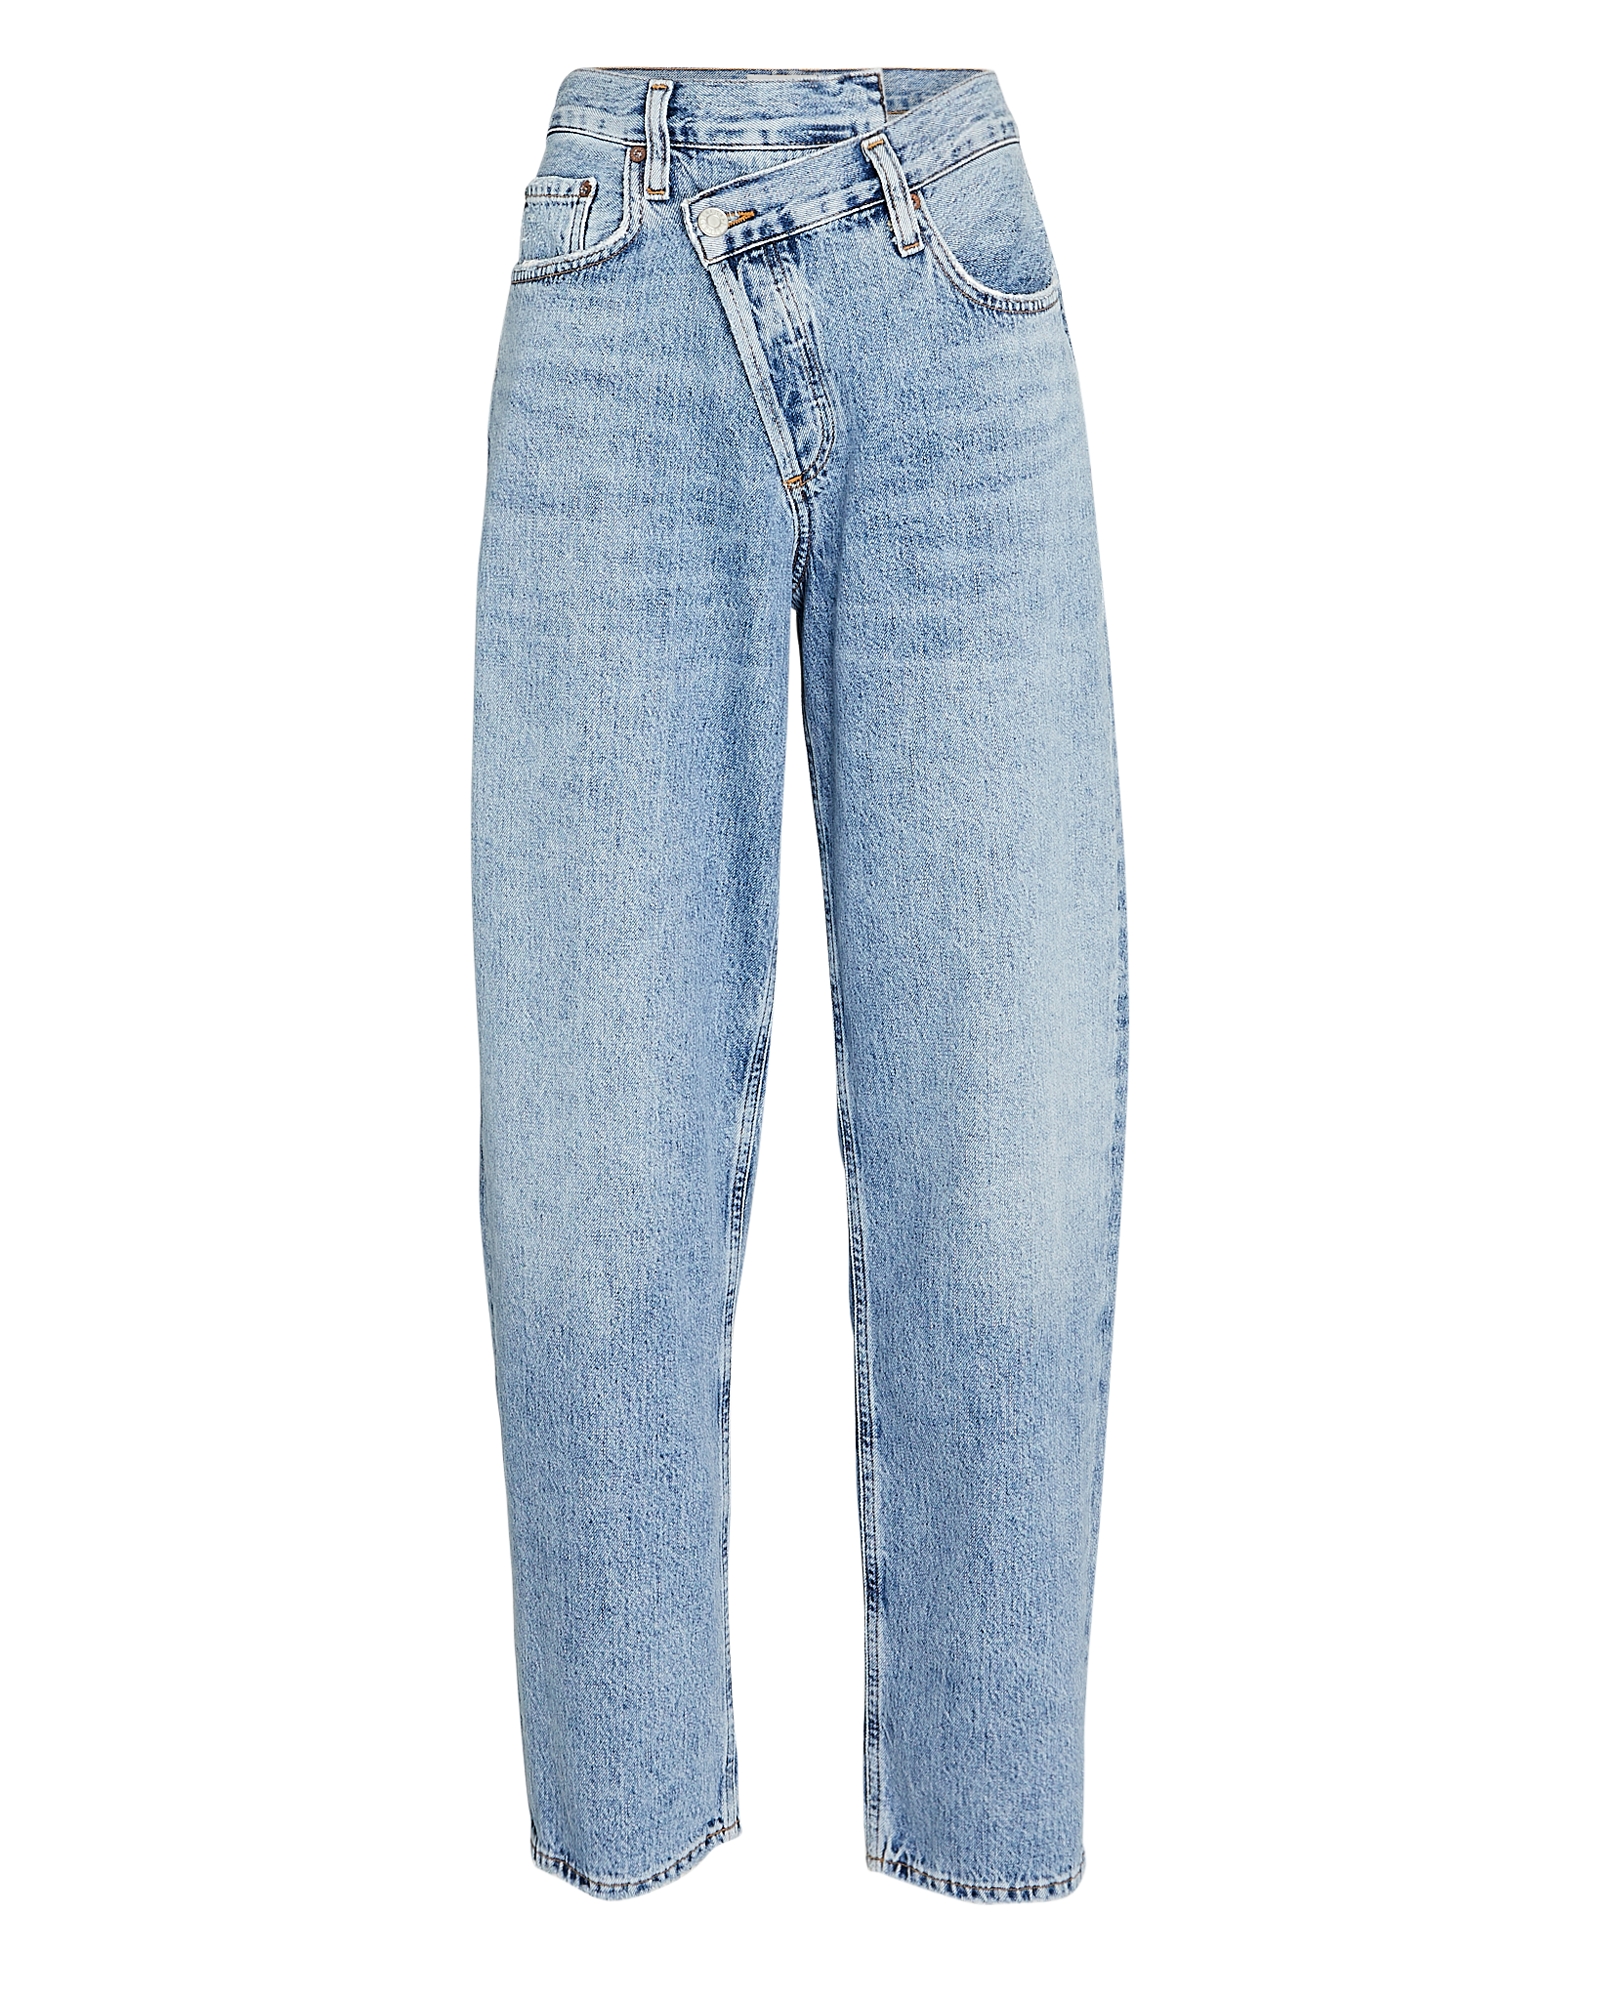 AGOLDE Criss Cross Upsized Jeans | INTERMIX®